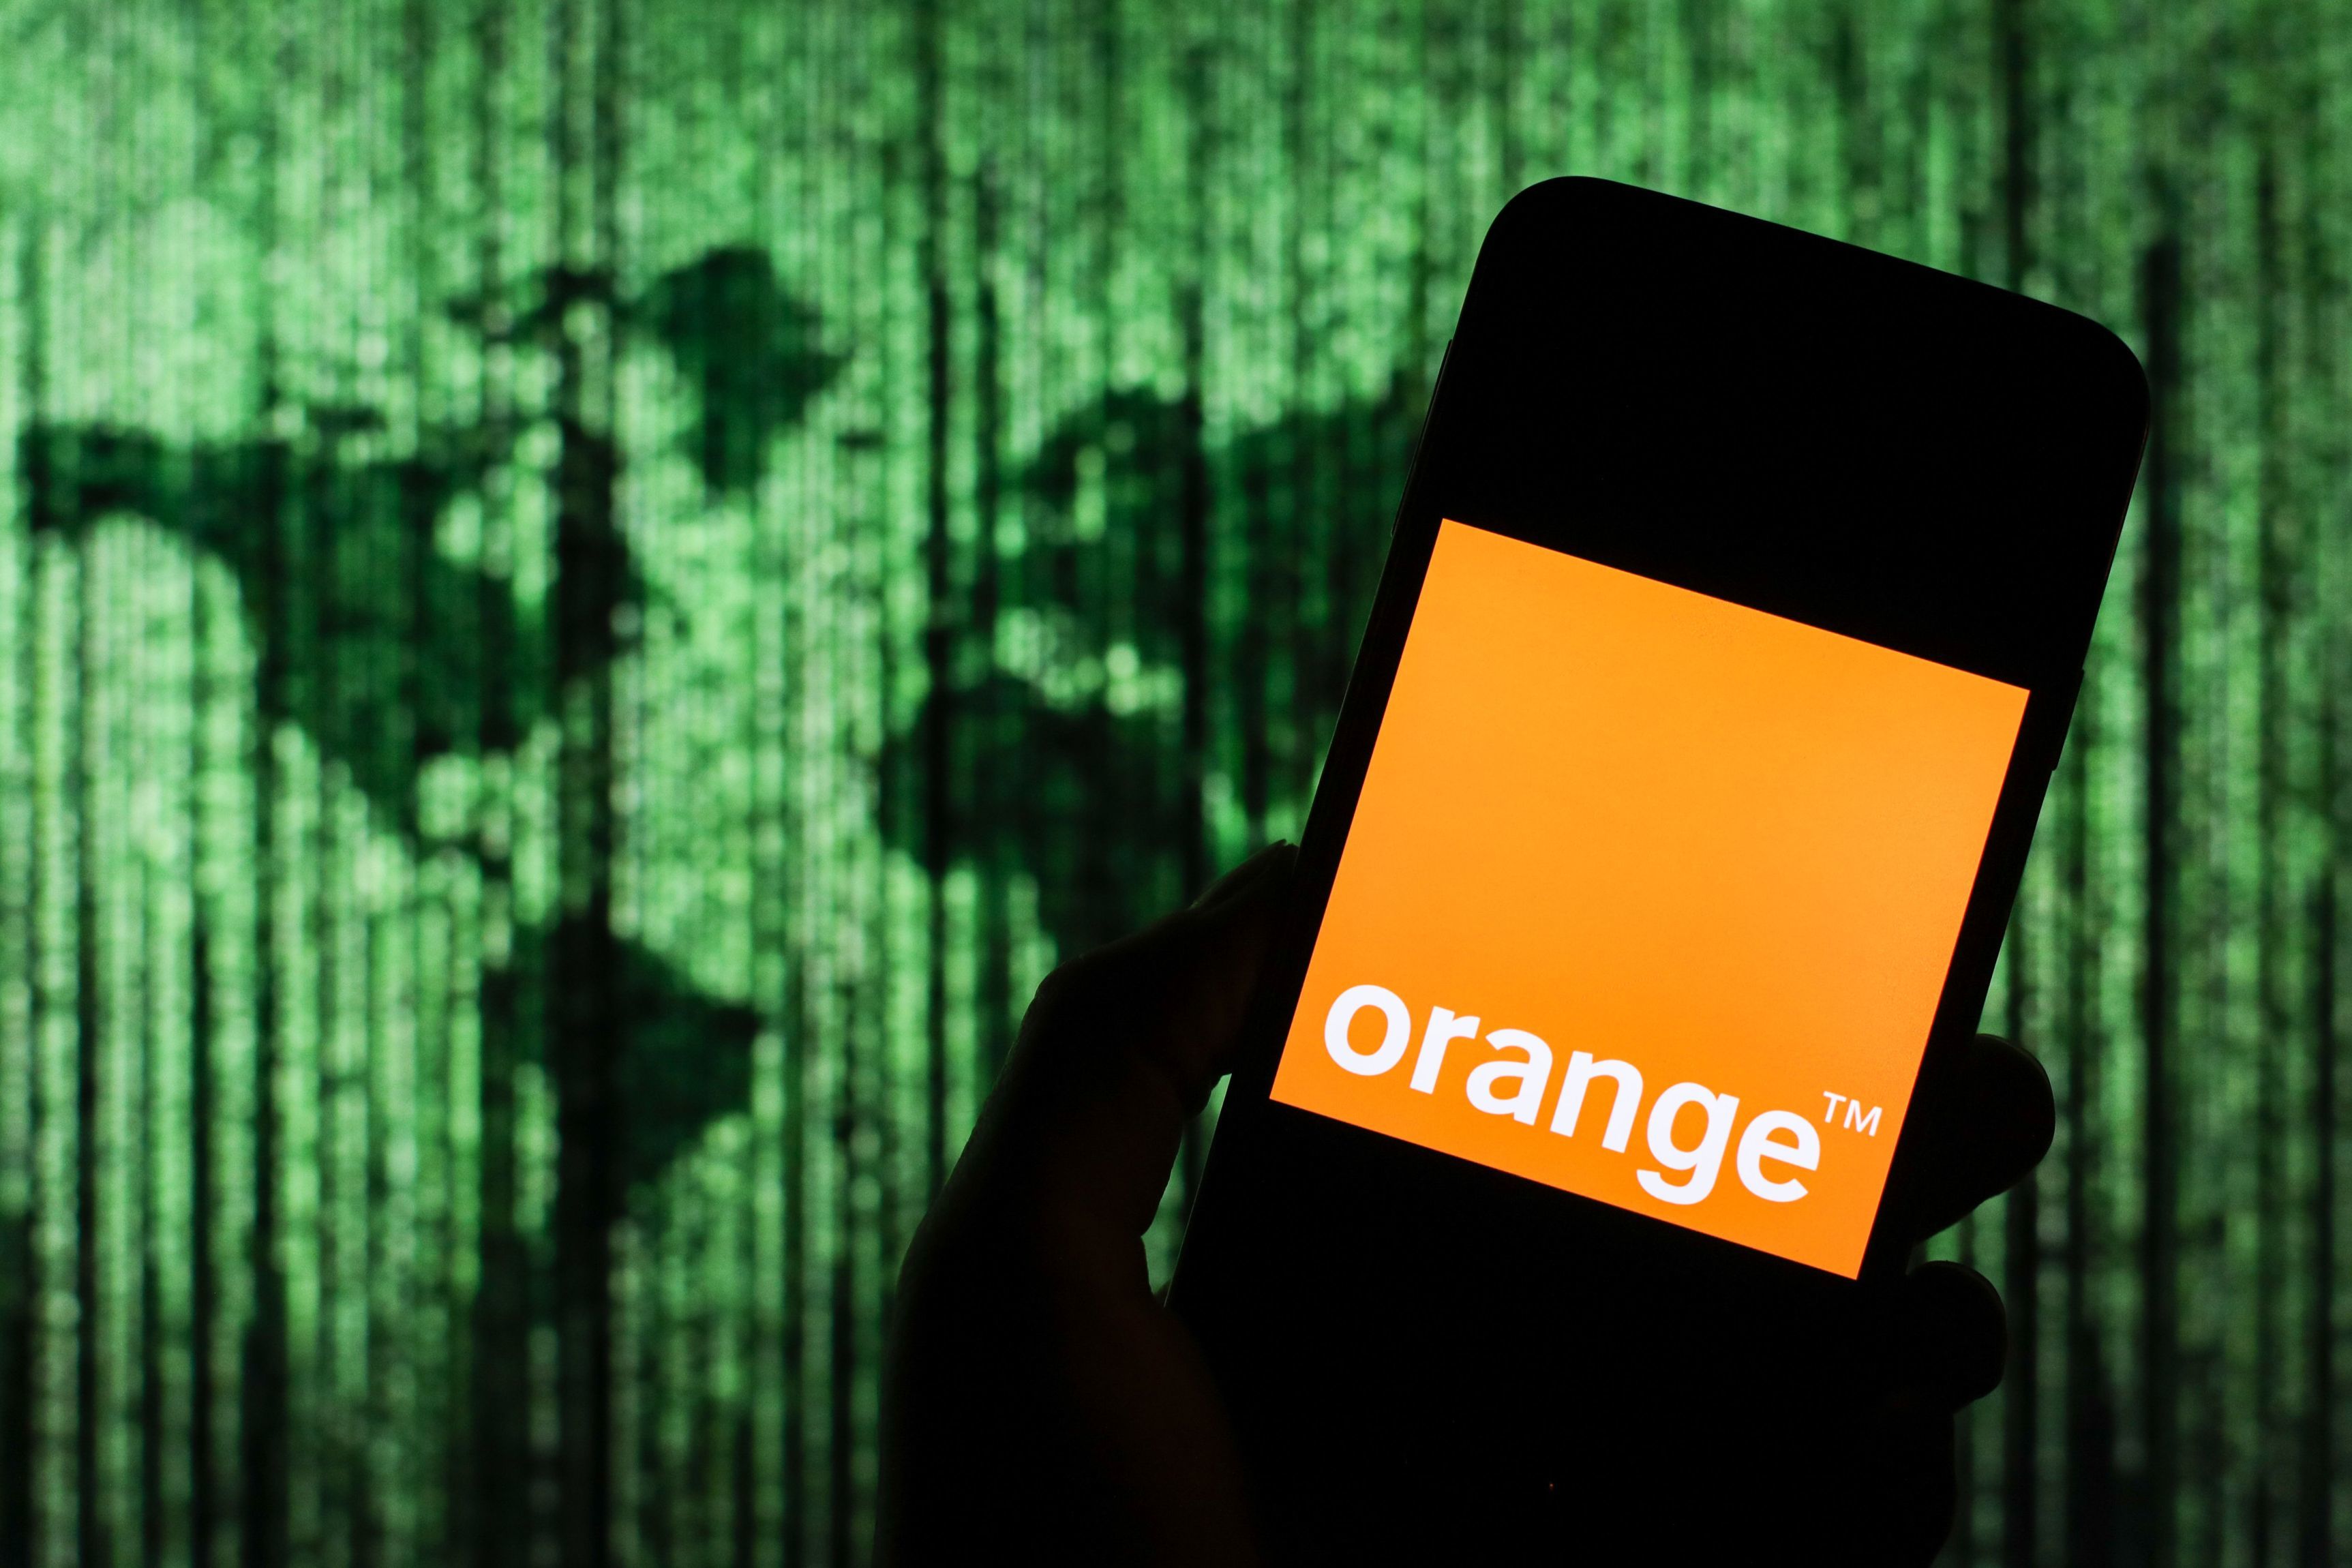 thesaurus Eastern Mourn Orange-Telekom, tranzacţie încheiată Paginademedia.ro